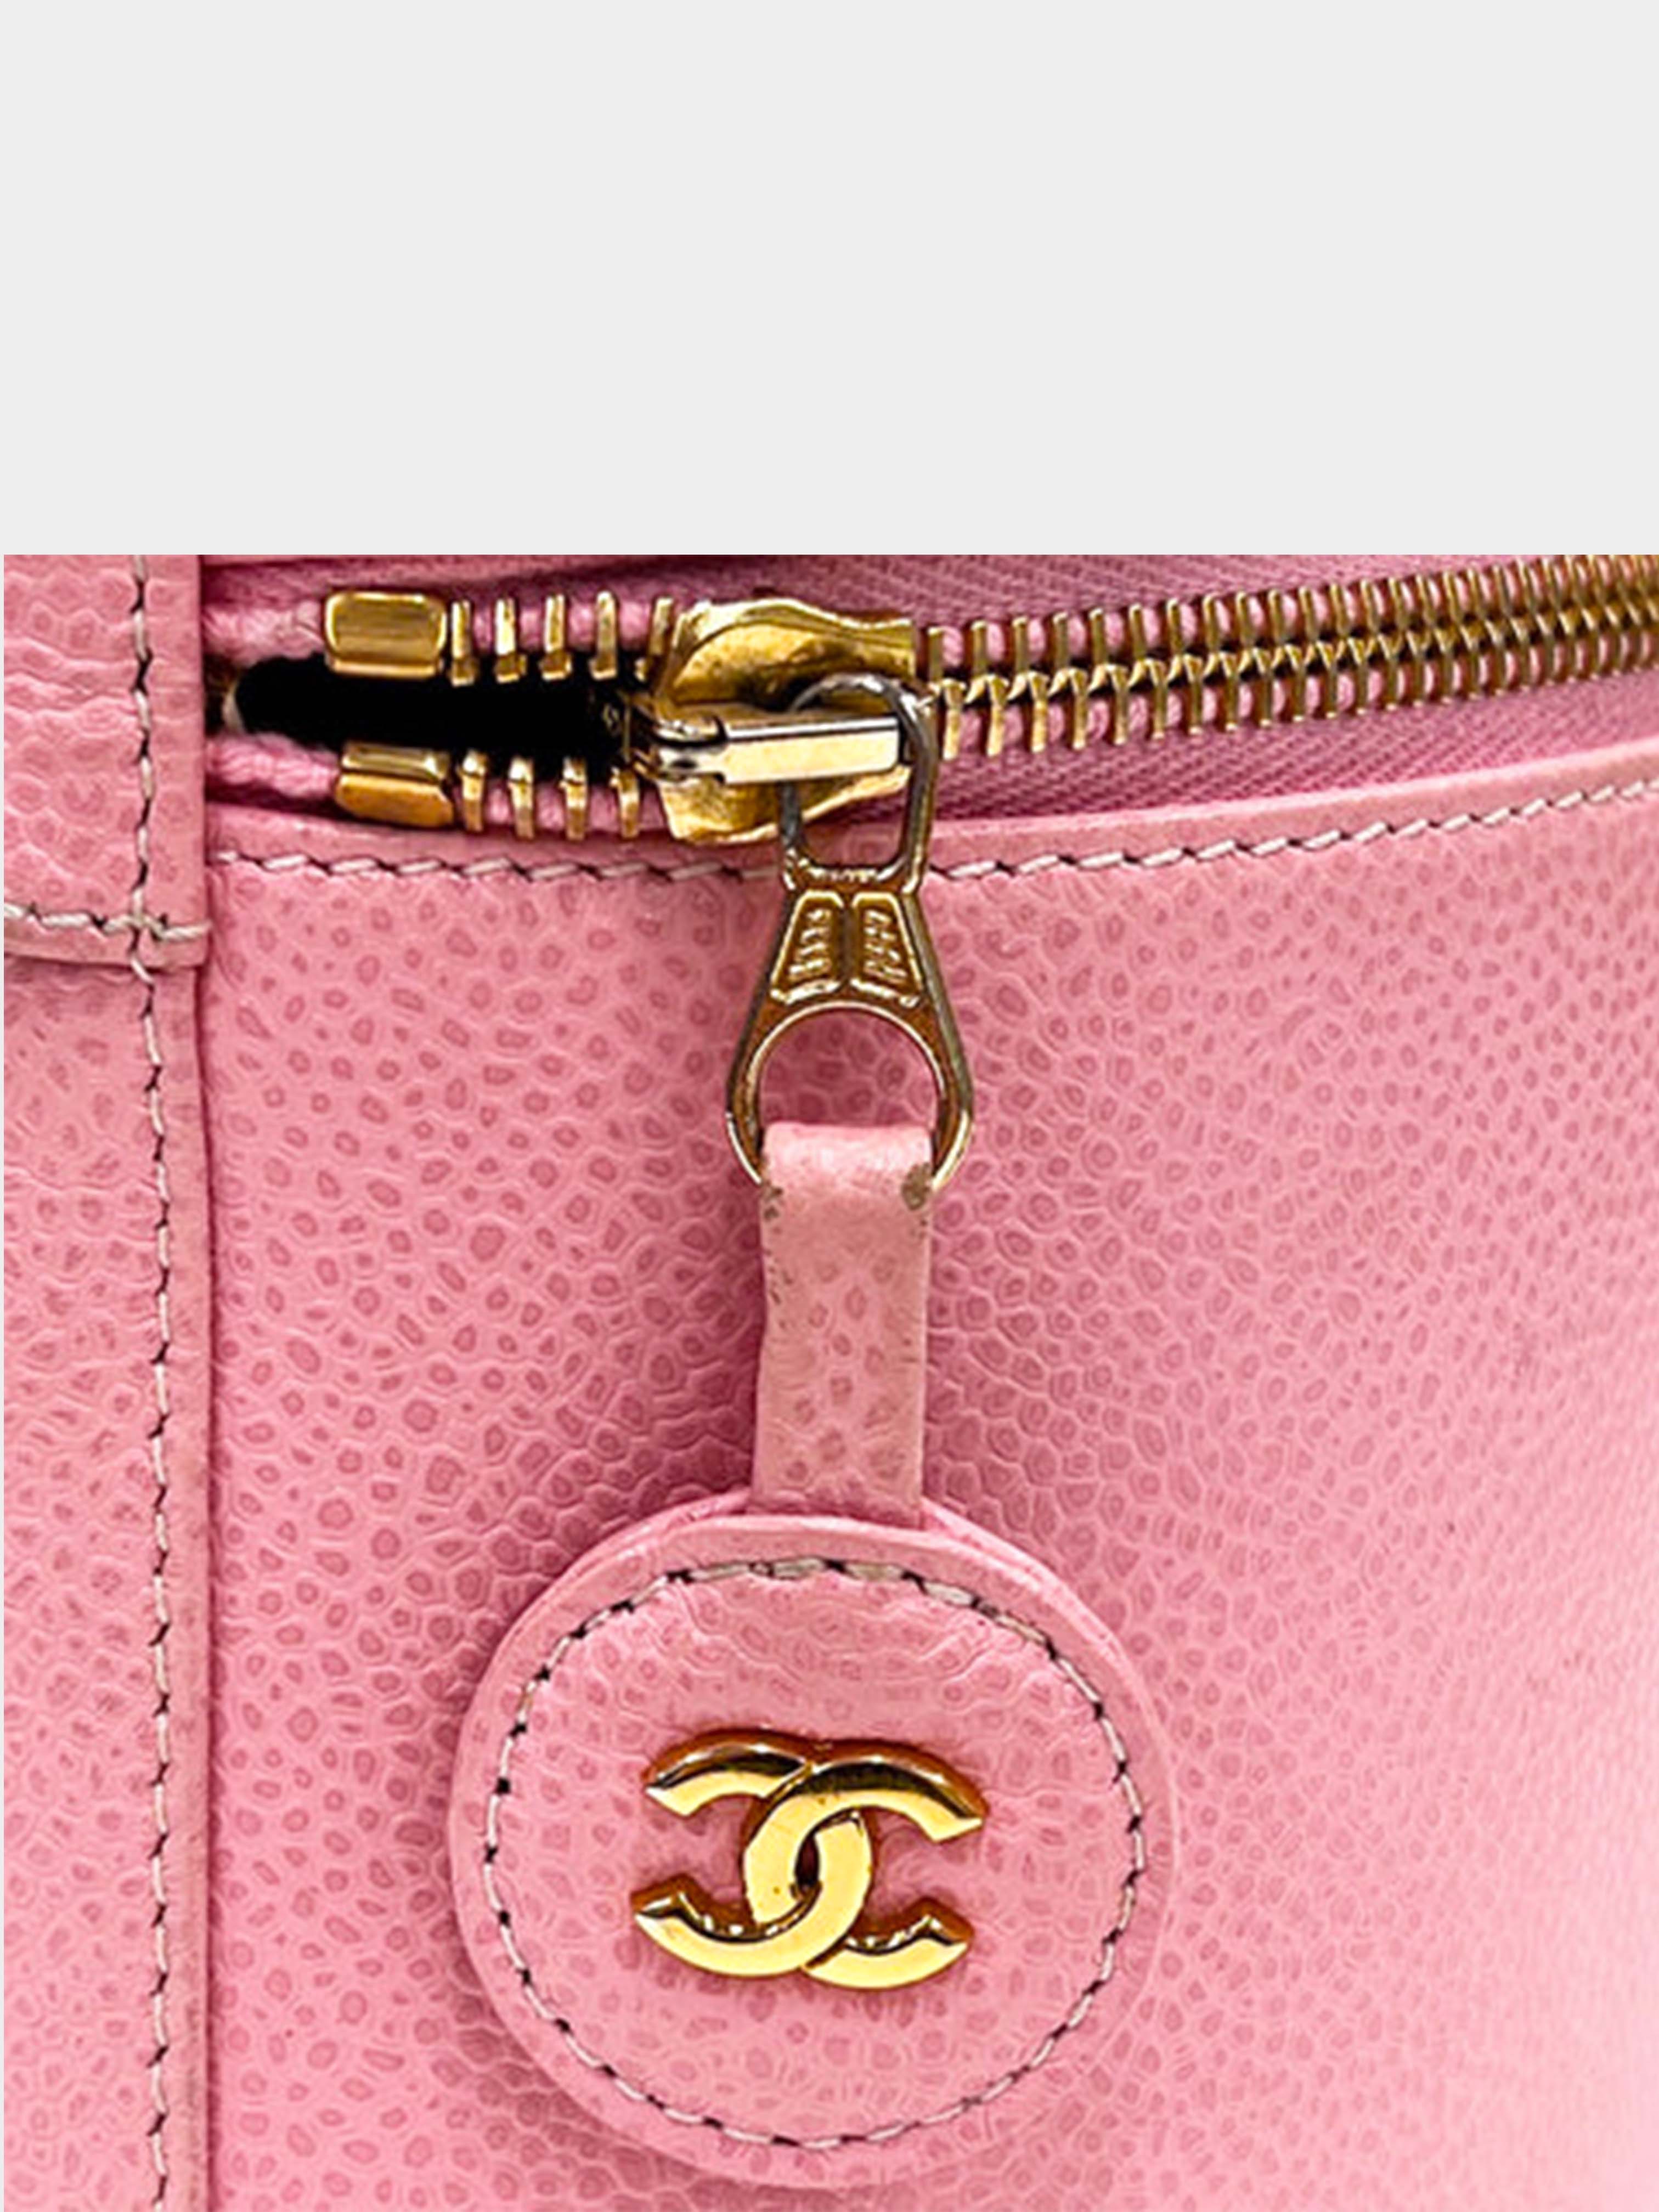 Chanel Black Chanel Handbags Lingge PNG Images, Product Kind